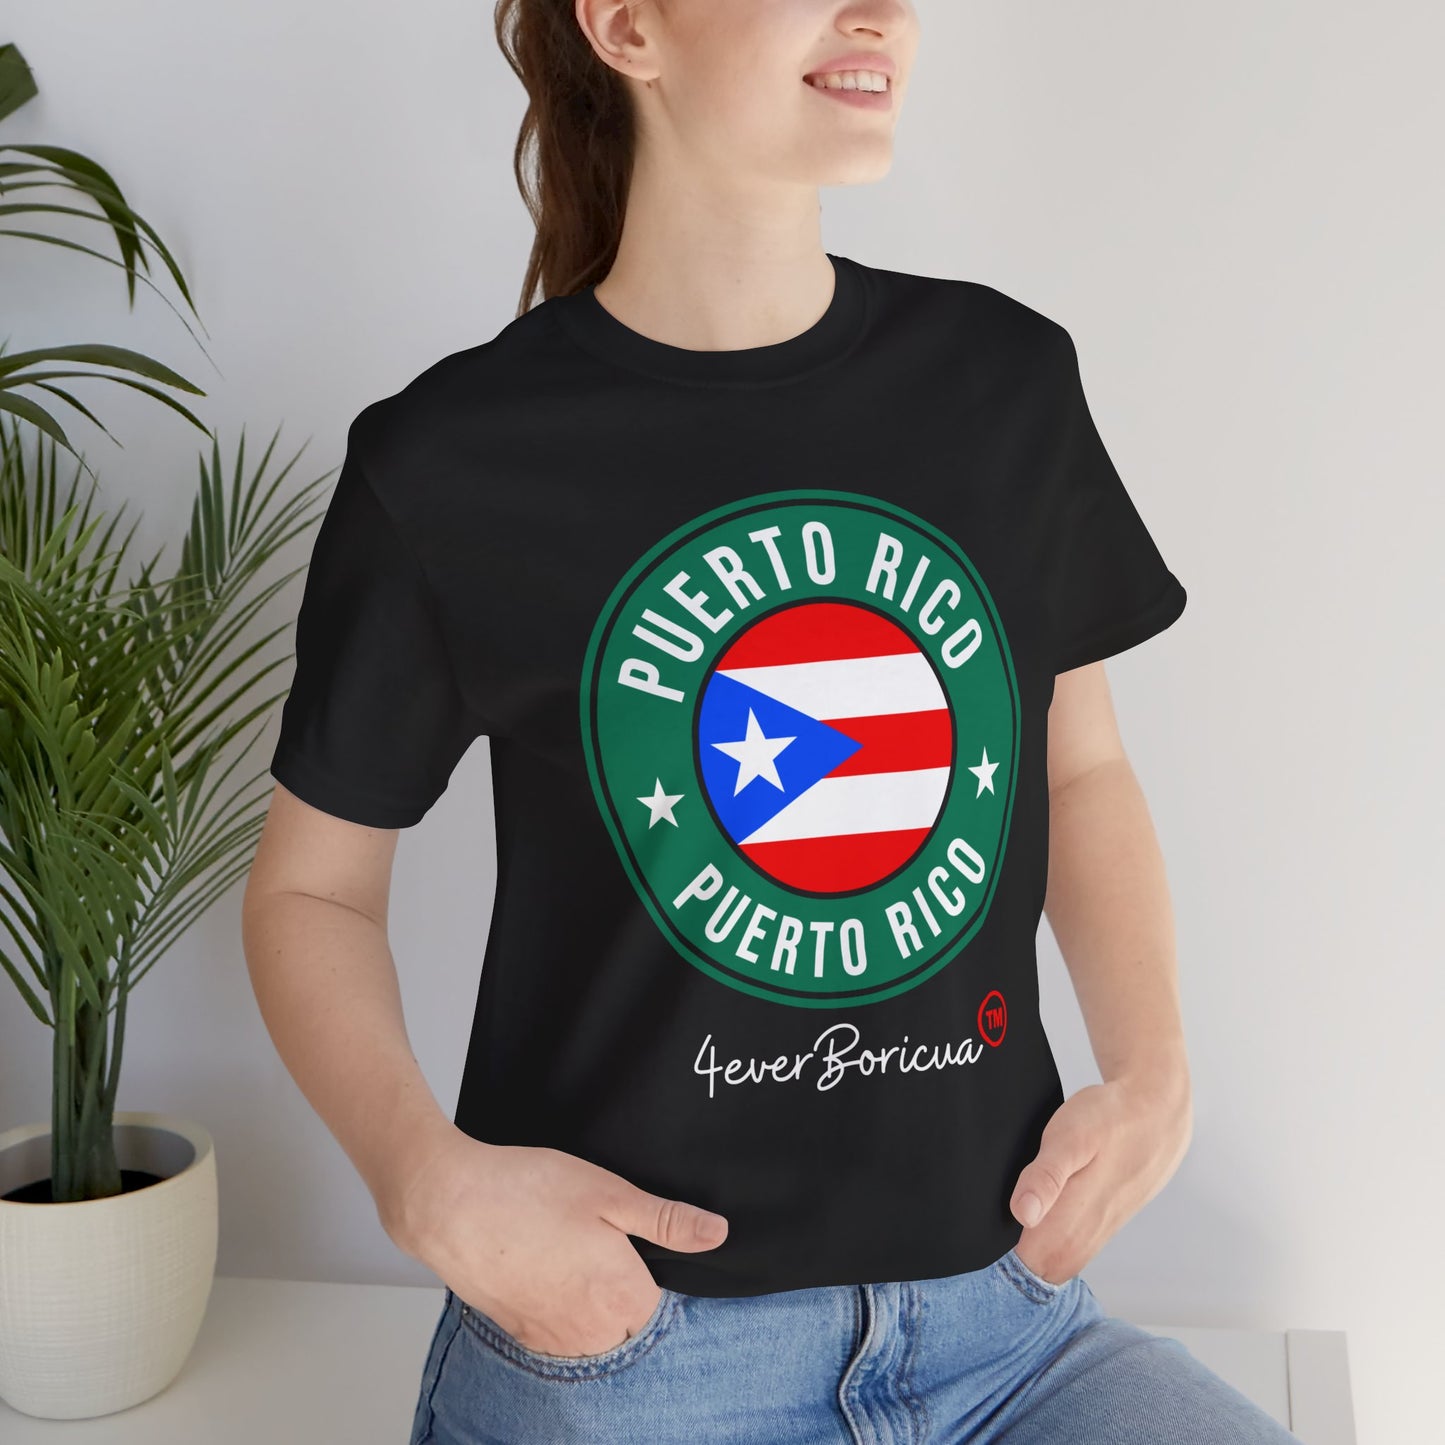 PUERTO RICO SEAL AND FLAG Unisex Boricua Shirt 4everBoricua™️